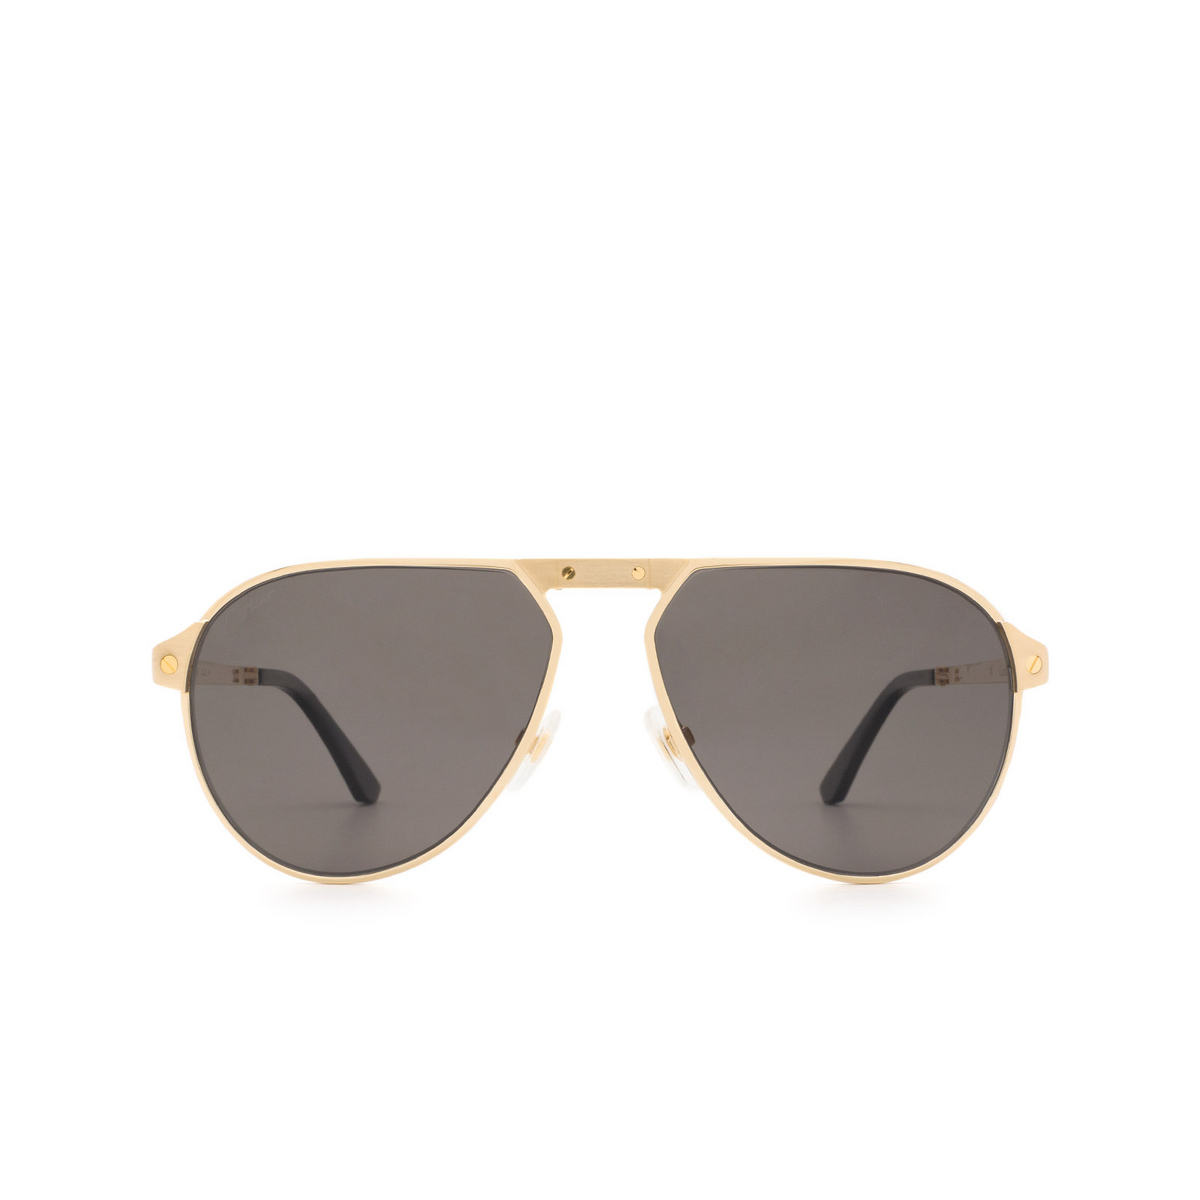 Cartier® Sunglasses: CT0265S color Gold 001 - front view.